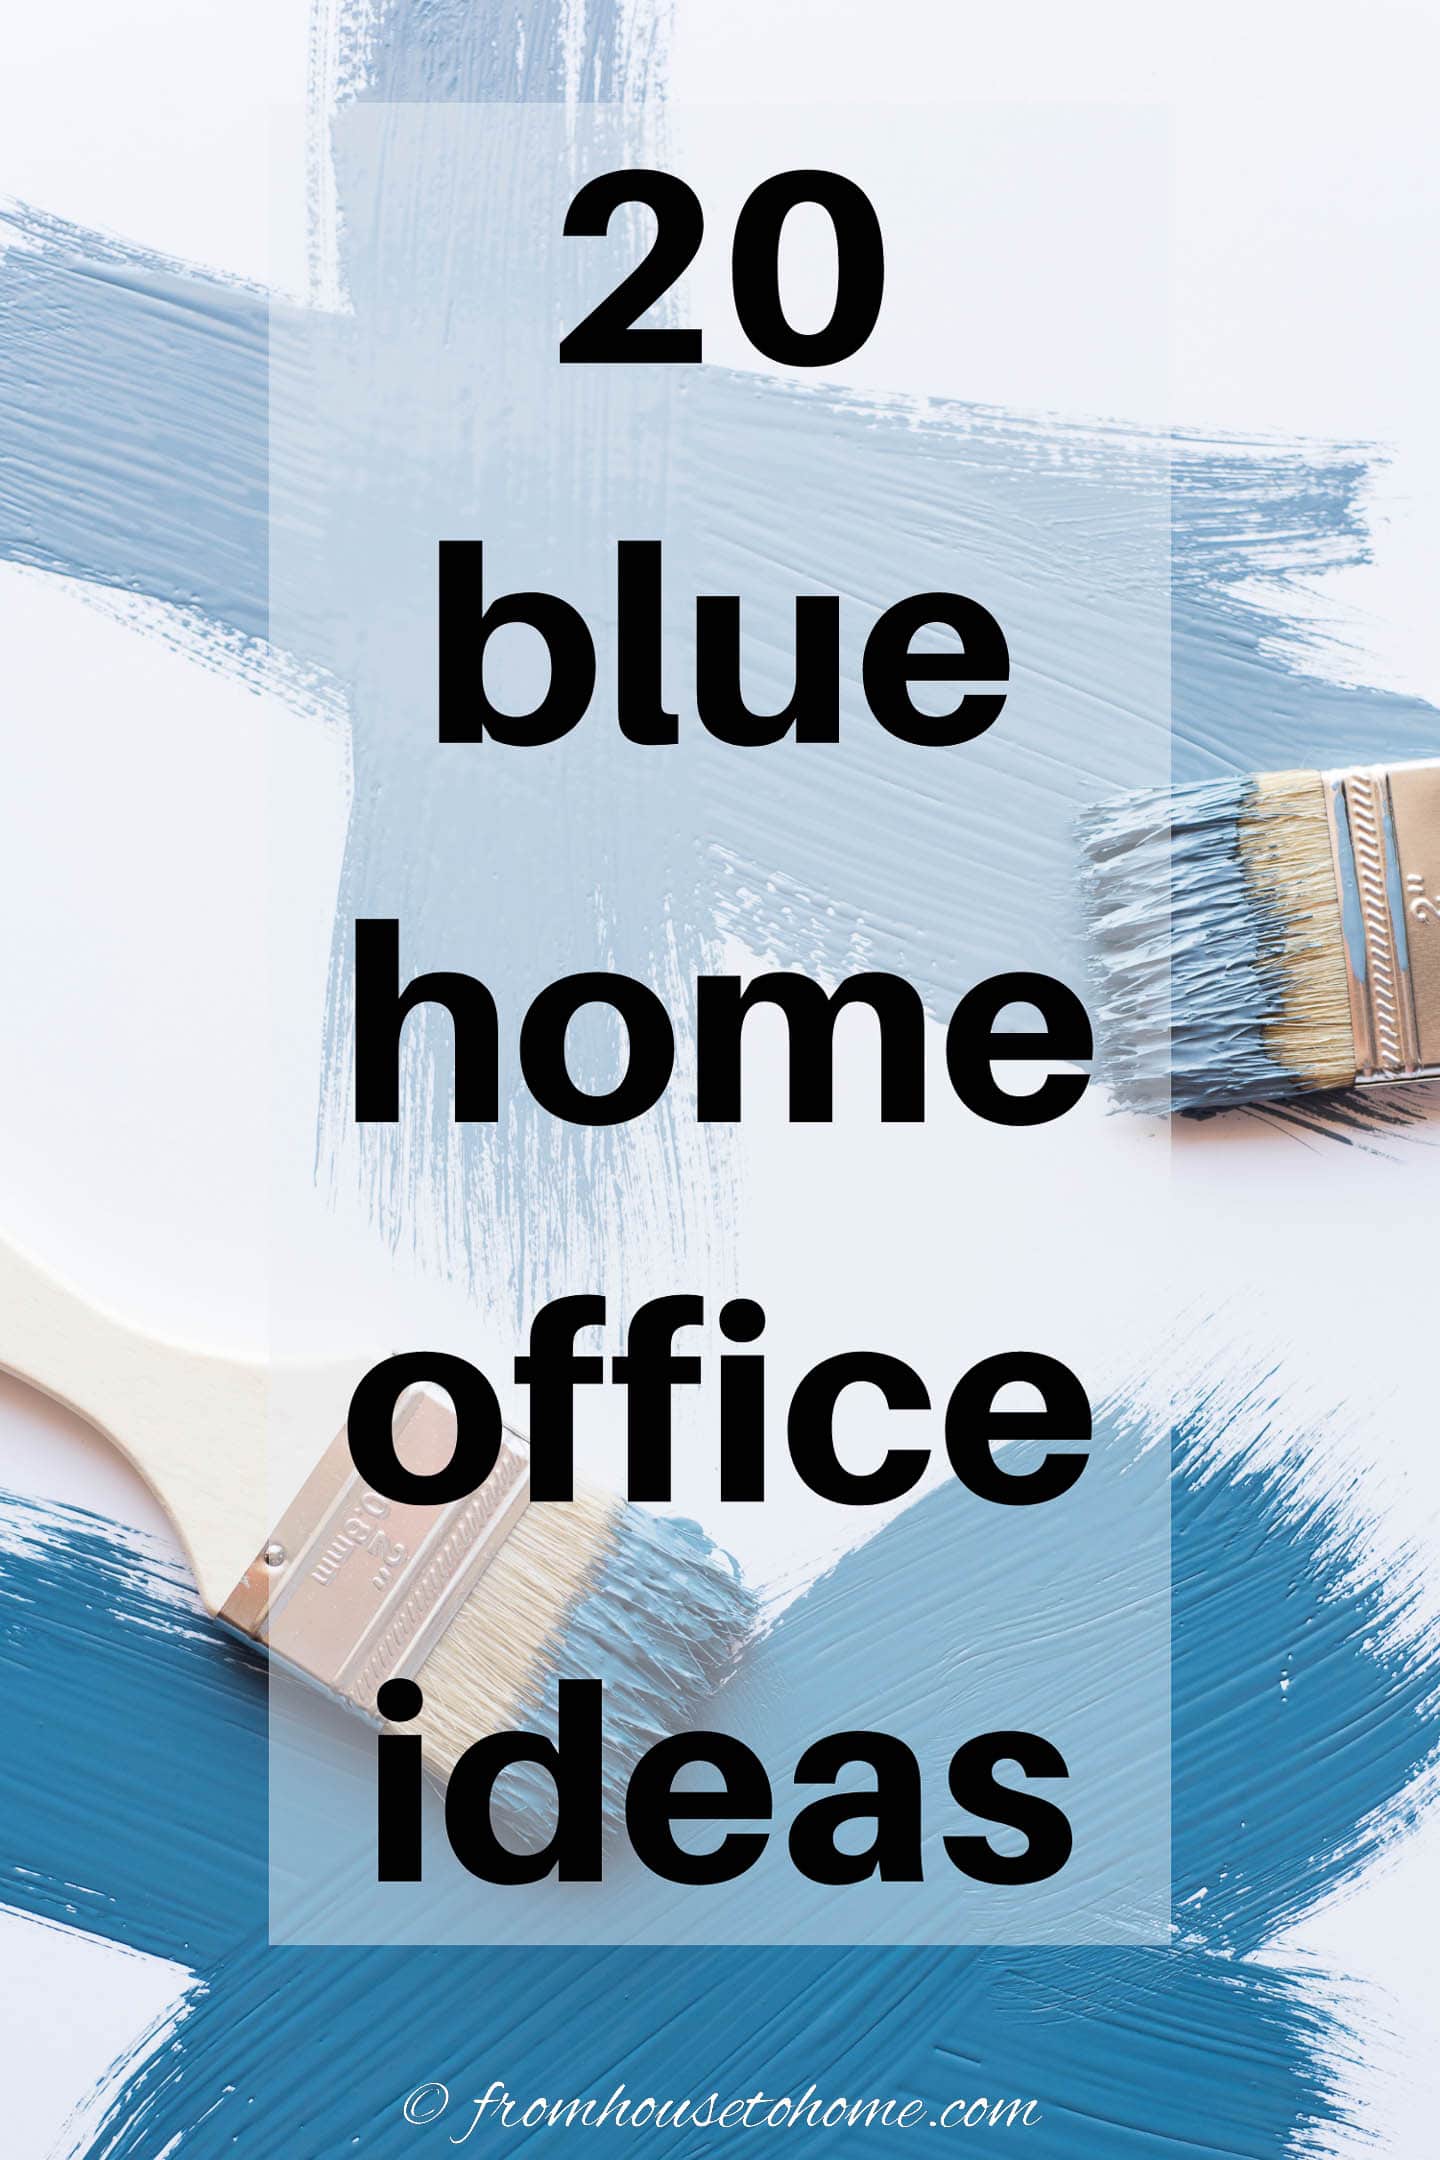 20 blue home office ideas